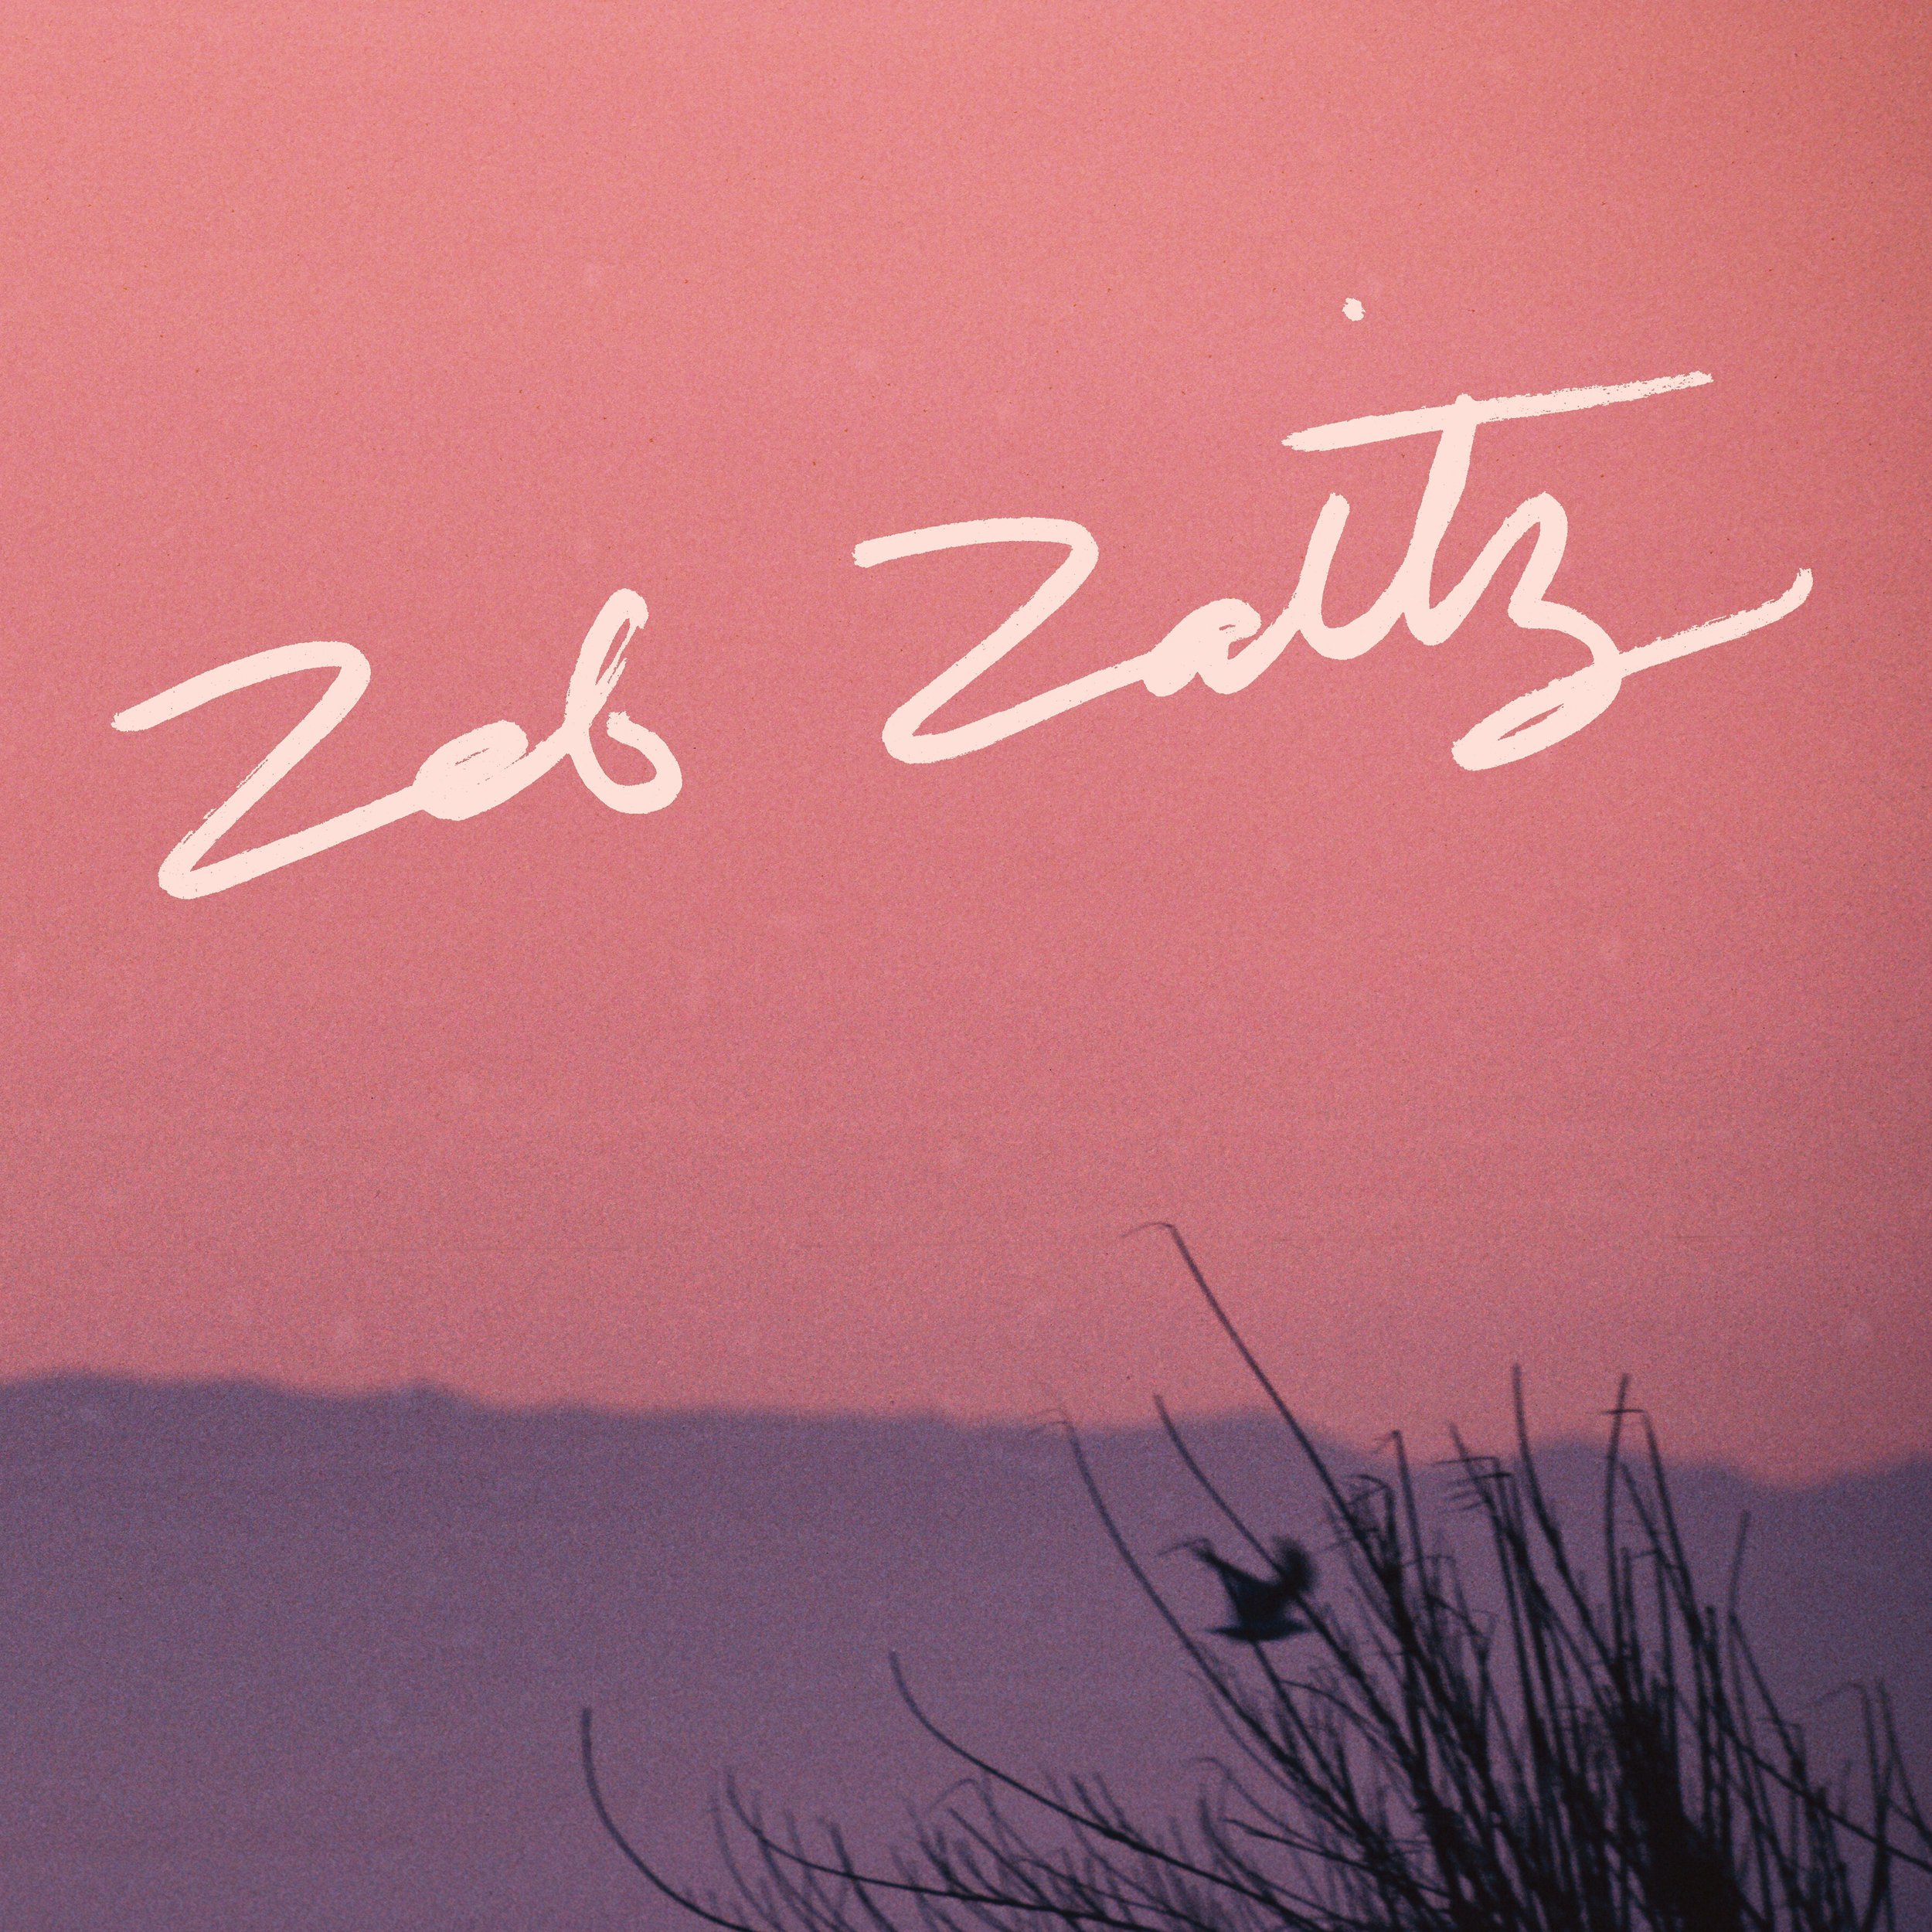 "Zeb Zaitz" (self-titled)